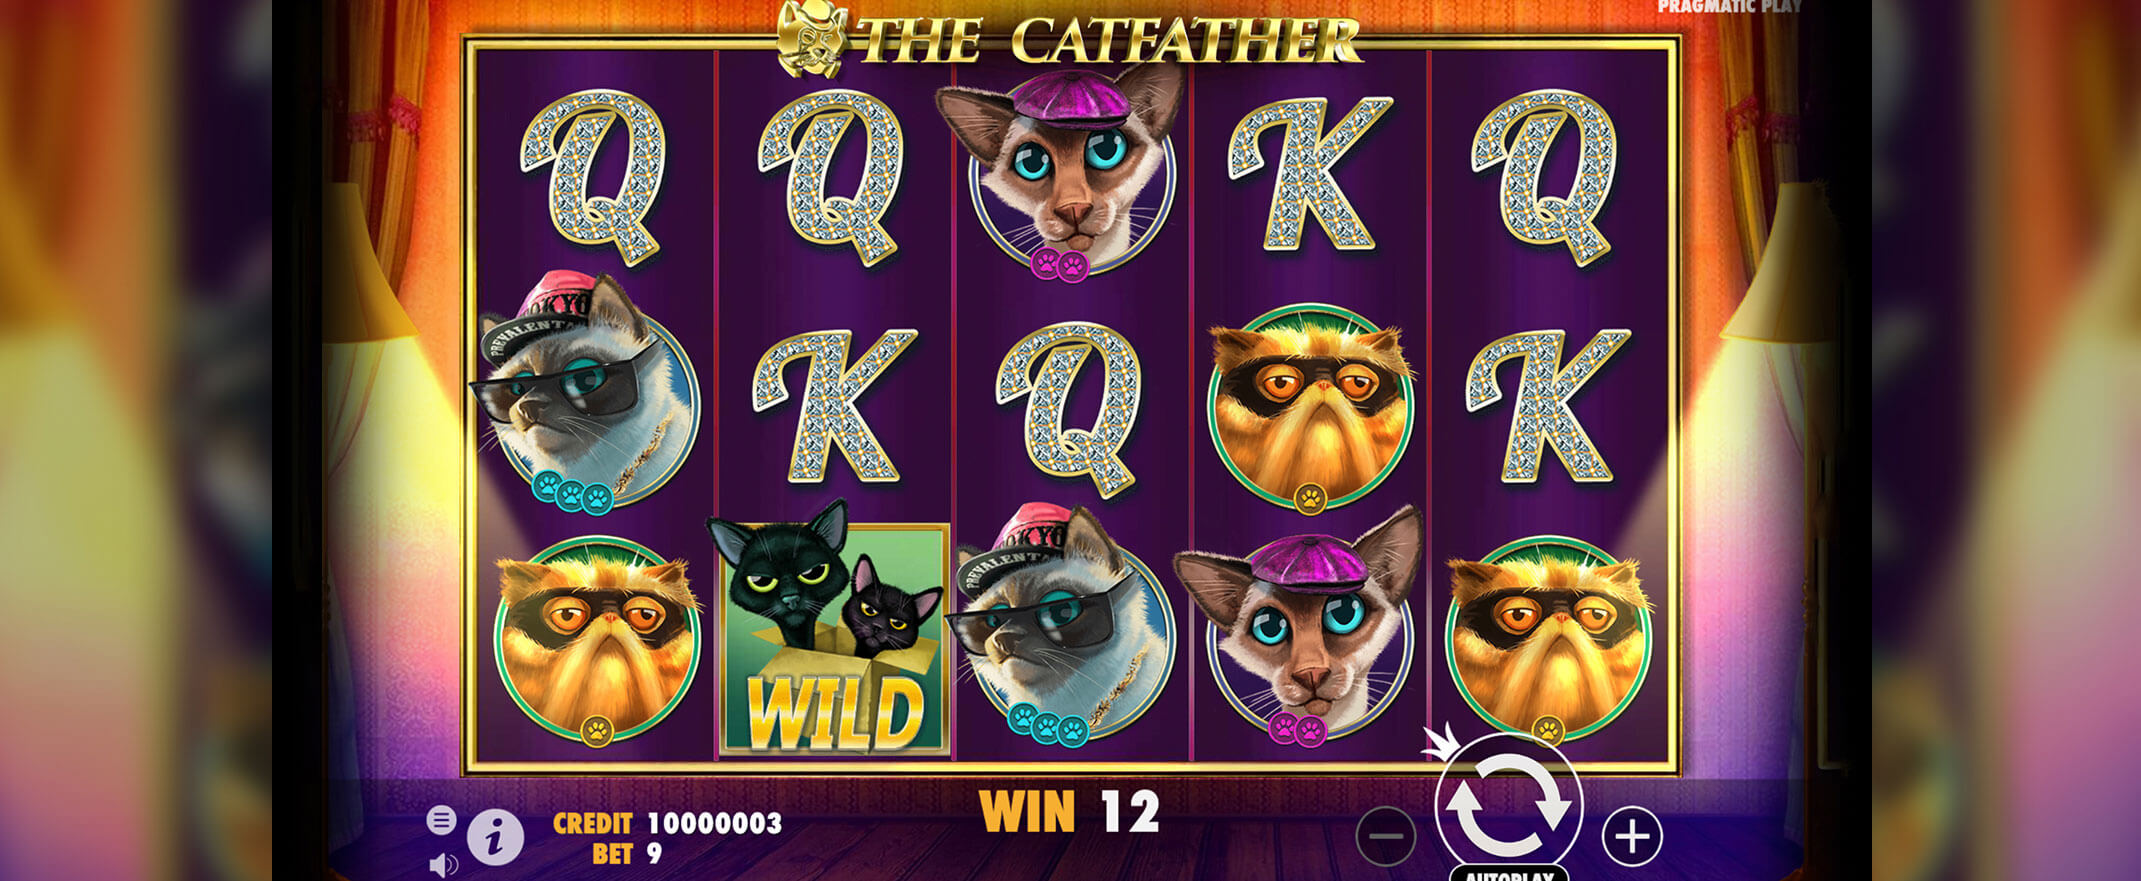 The Catfather slot screenshot